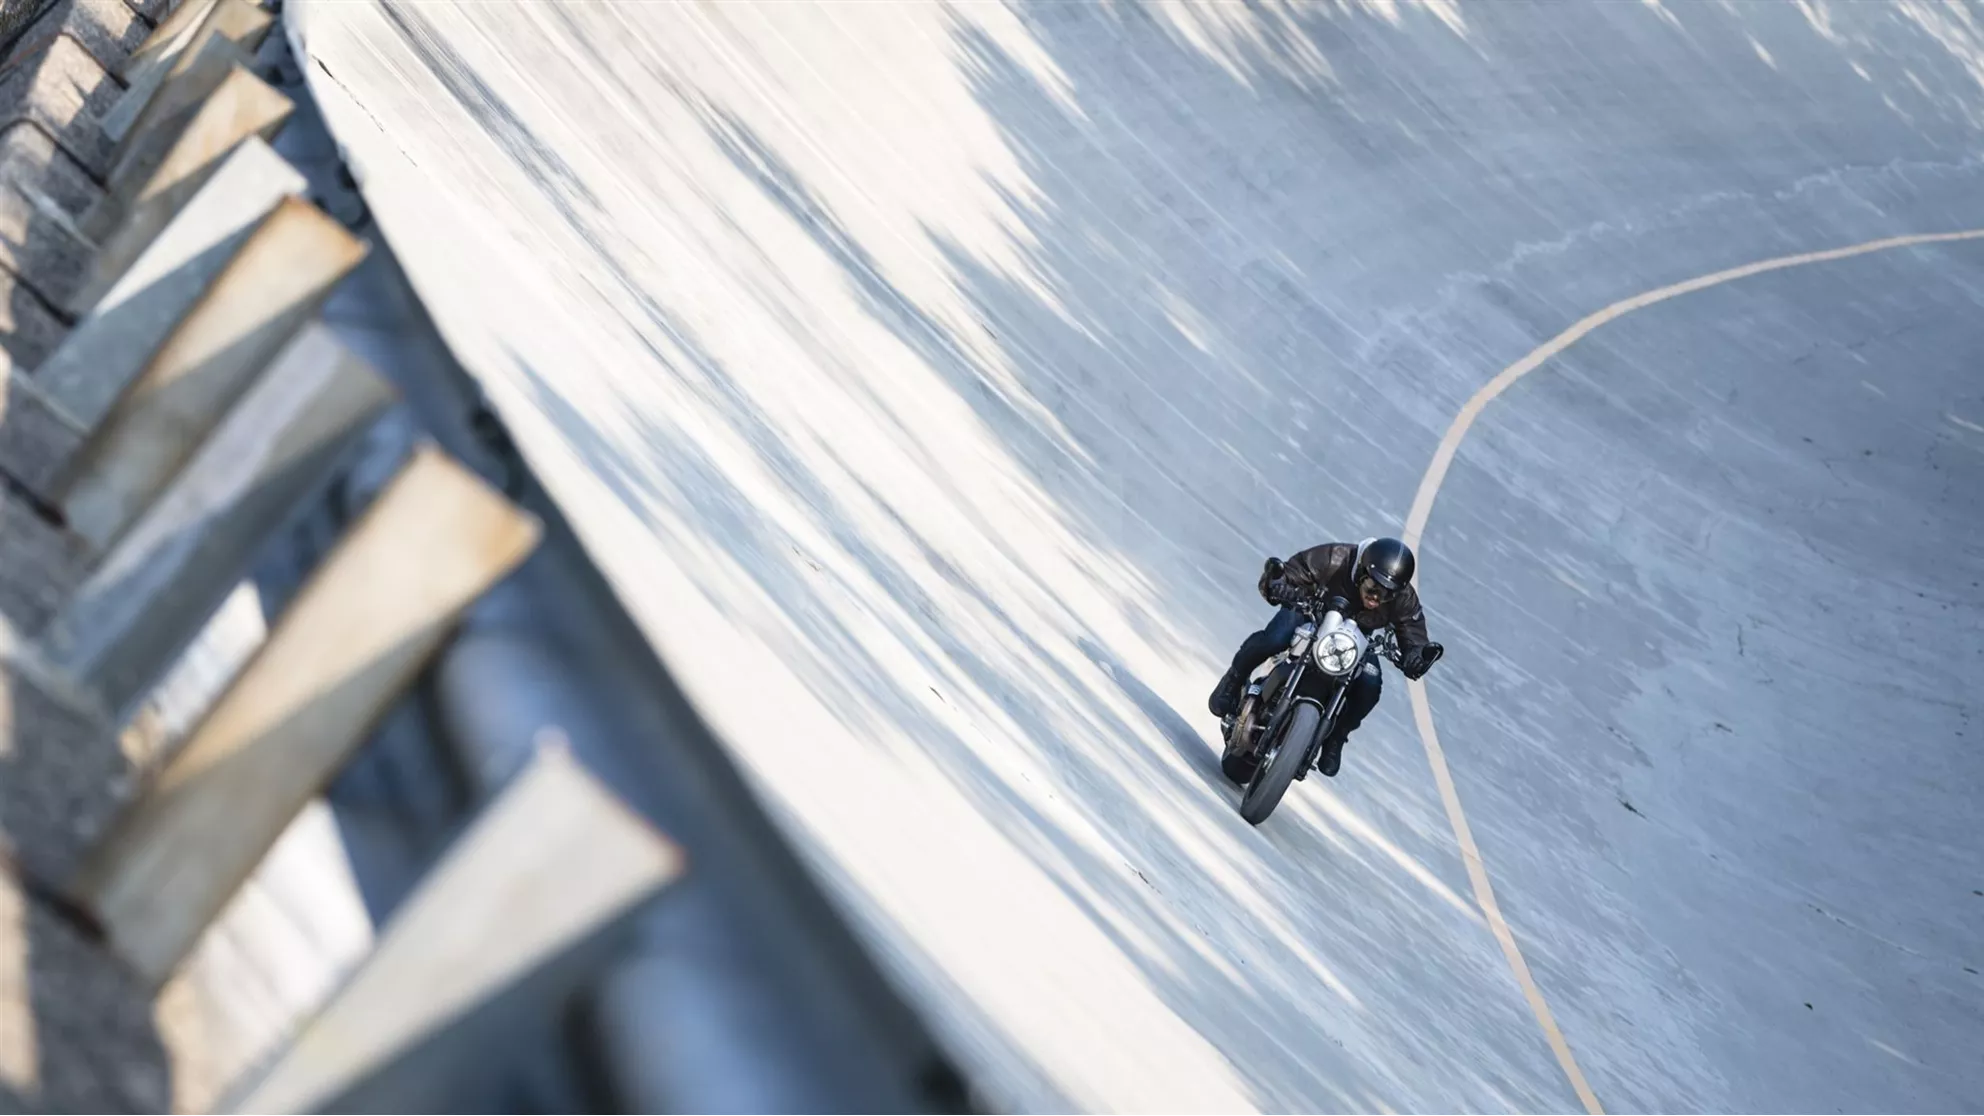 Ducati Scrambler Cafe Racer - Image 1